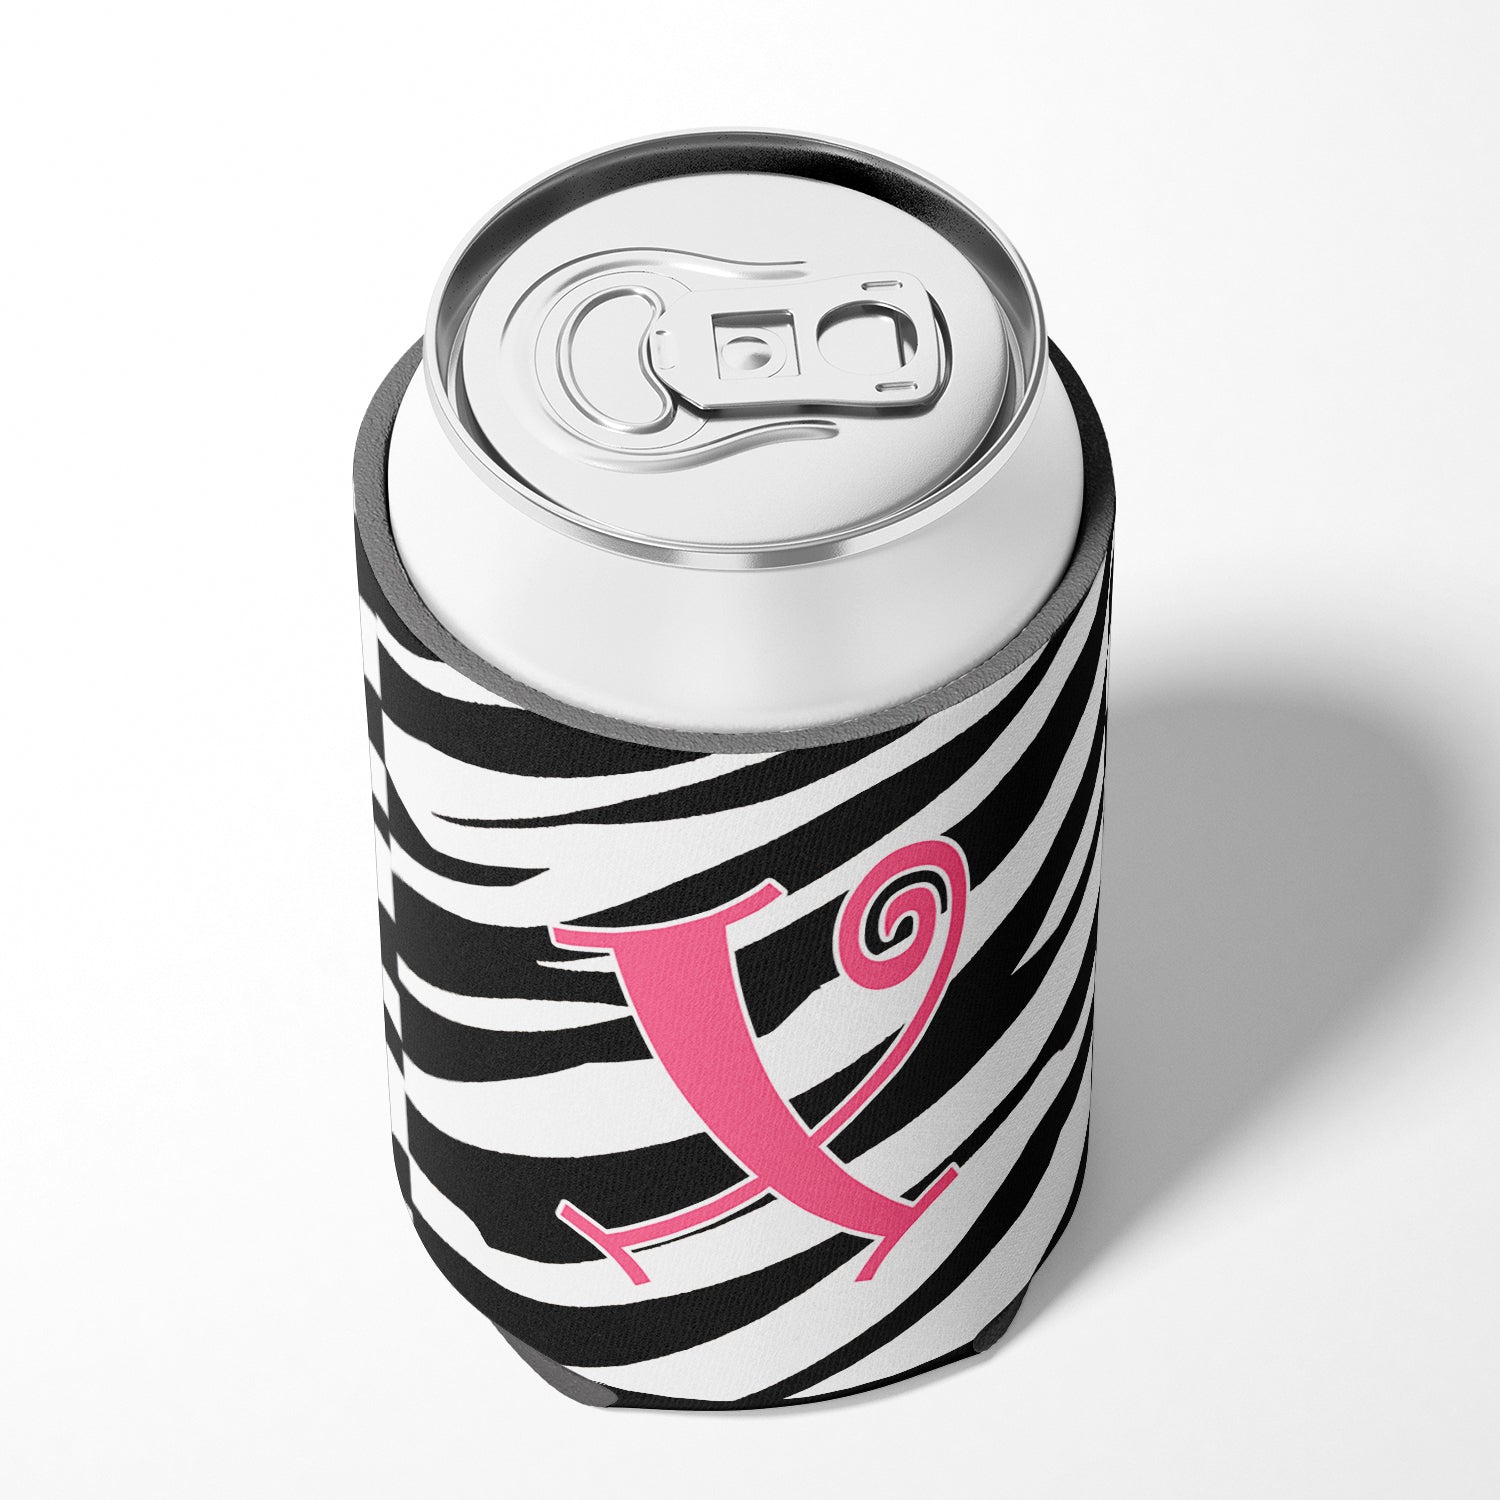 Lettre X Initial Monogram - Zebra Stripe et Pink Can or Bottle Beverage Insulator Hugger